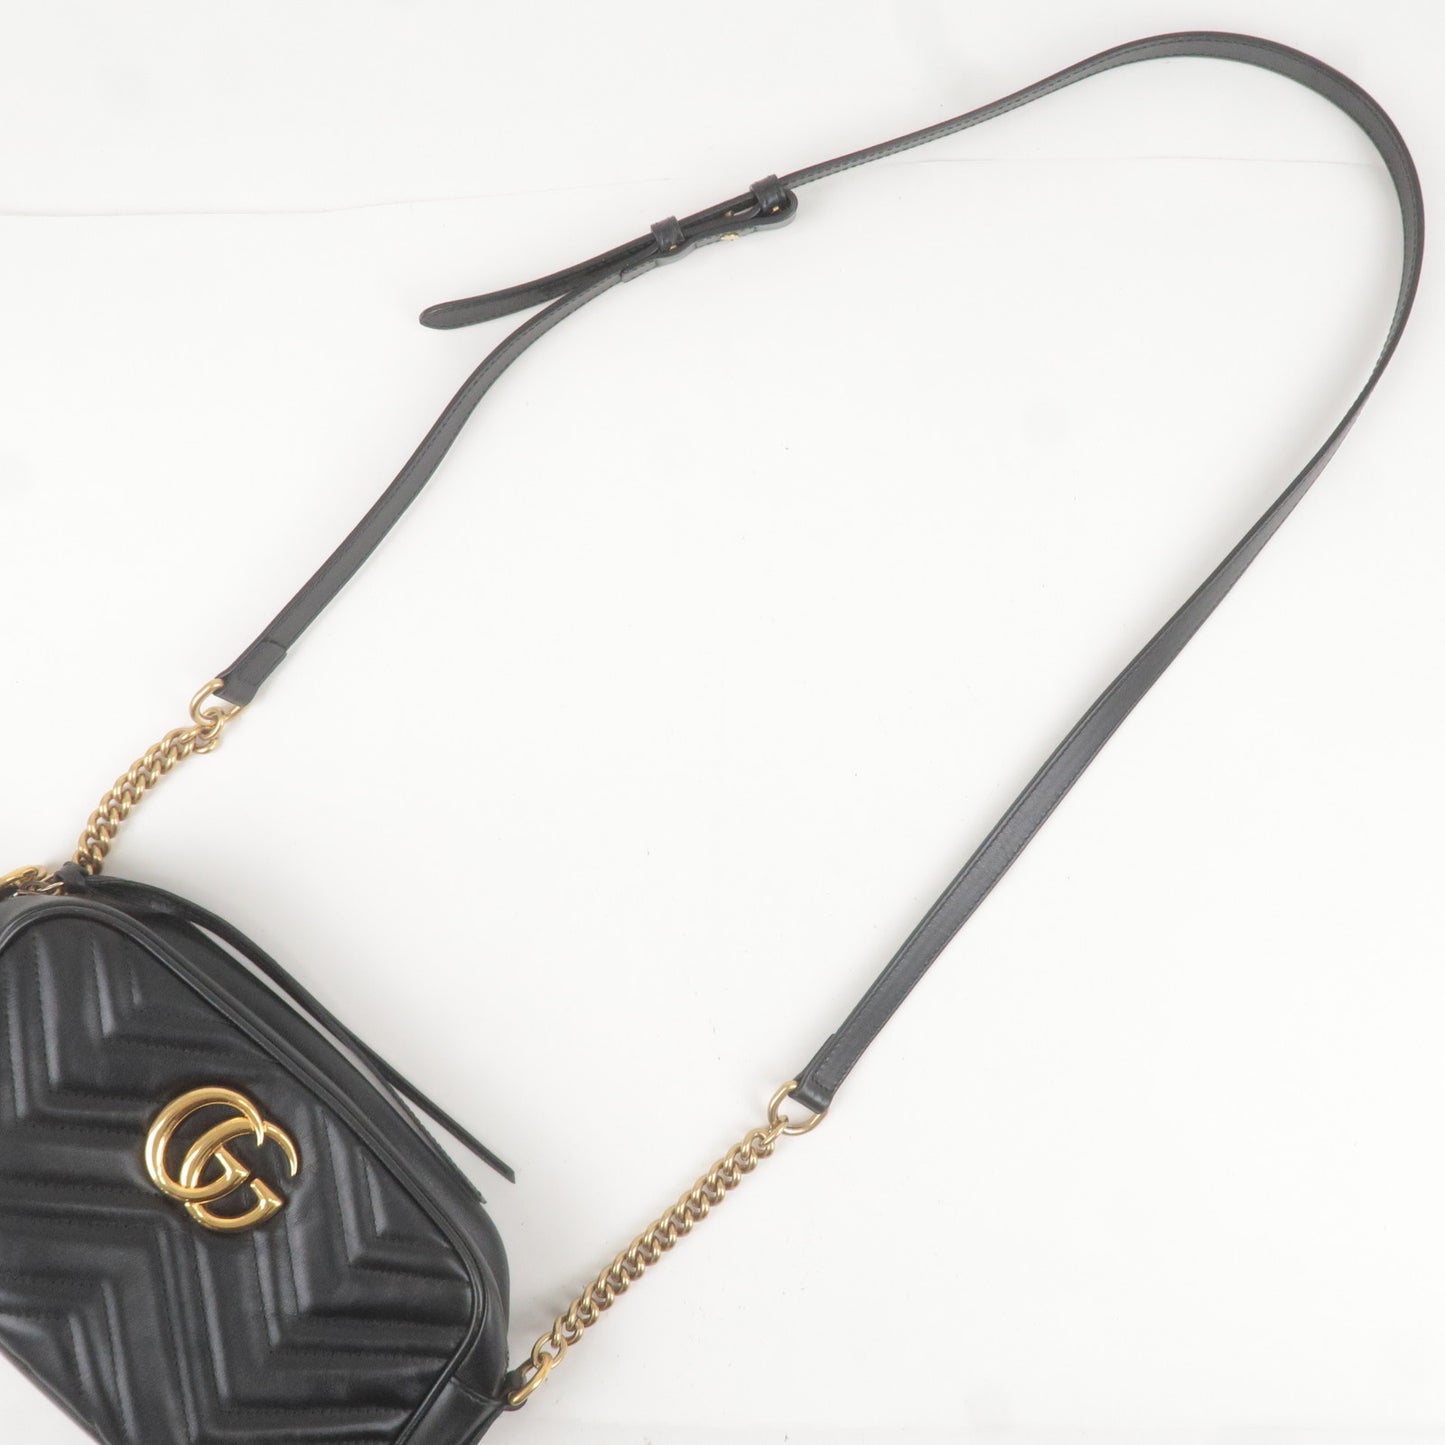 GUCCI GG Marmont Leather Chain Shoulder Bag Black 447632